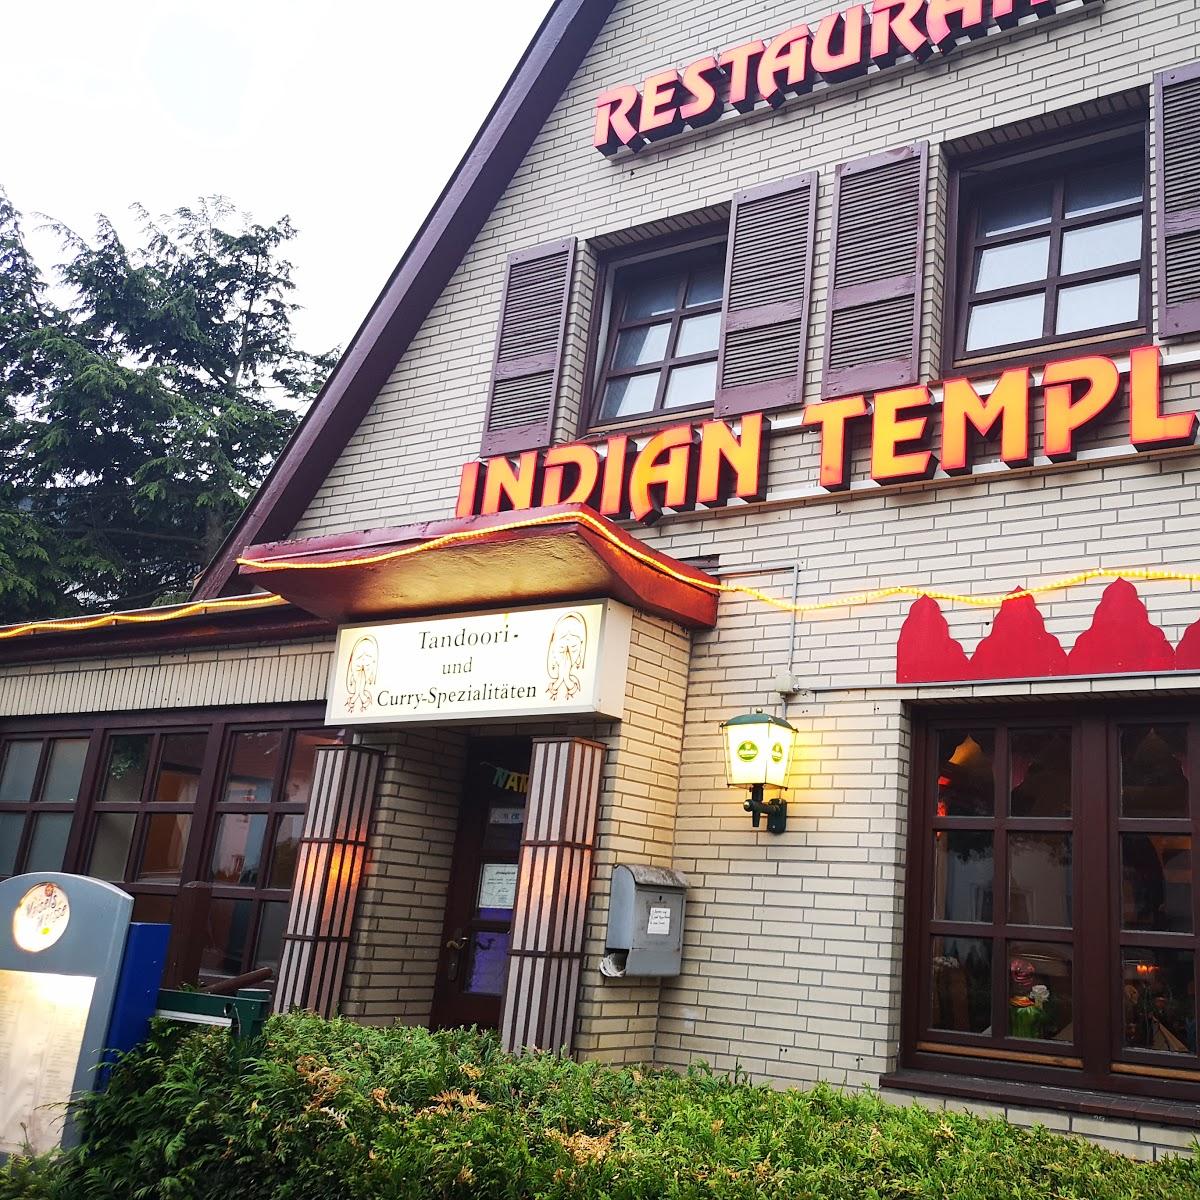 Restaurant "Indian Temple Restaurant" in Hamburg